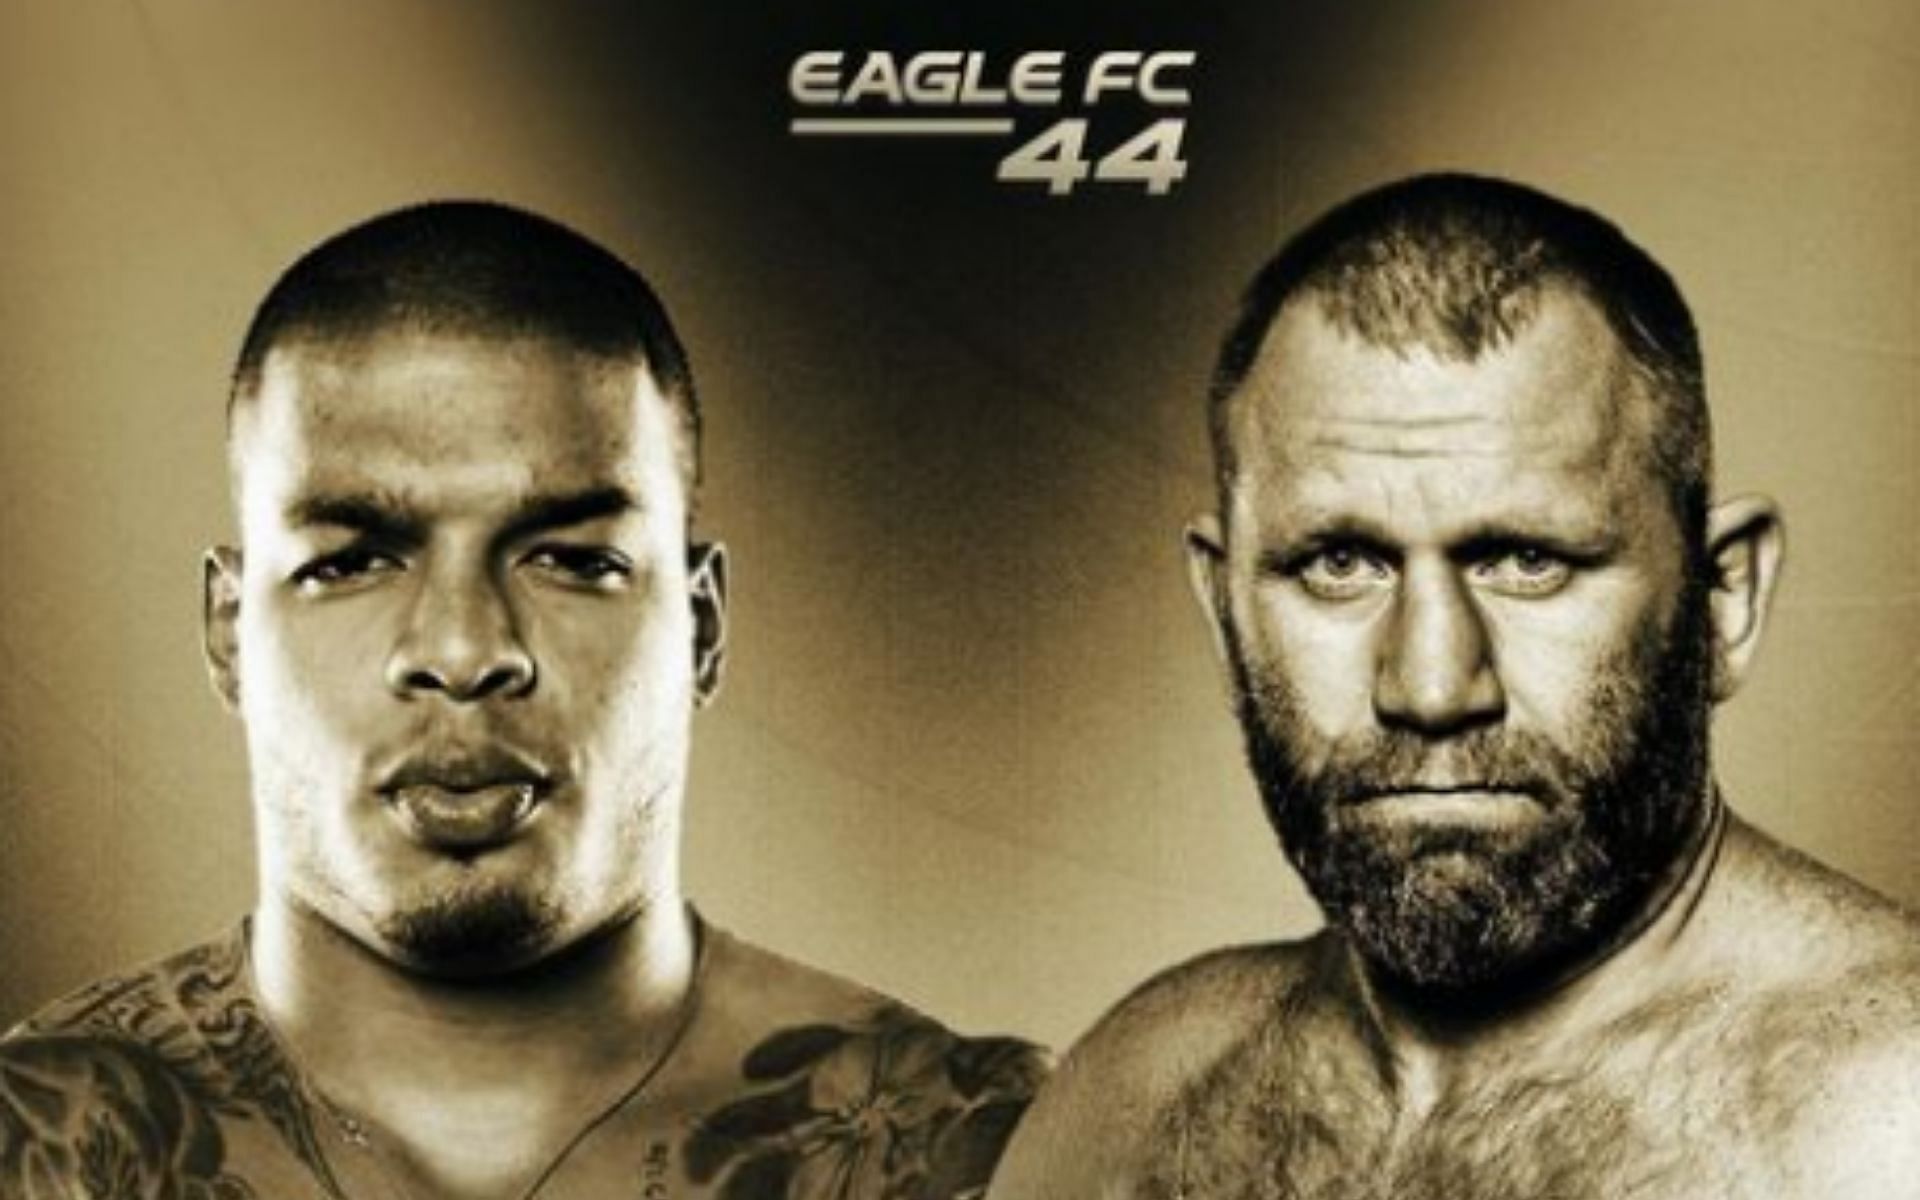 Tyrone Spong (left) will headline Eagle FC 44 with fellow heavyweight Sergei Kharitonov (right) [Image Credit: @eagle.fightclub on Instagram]